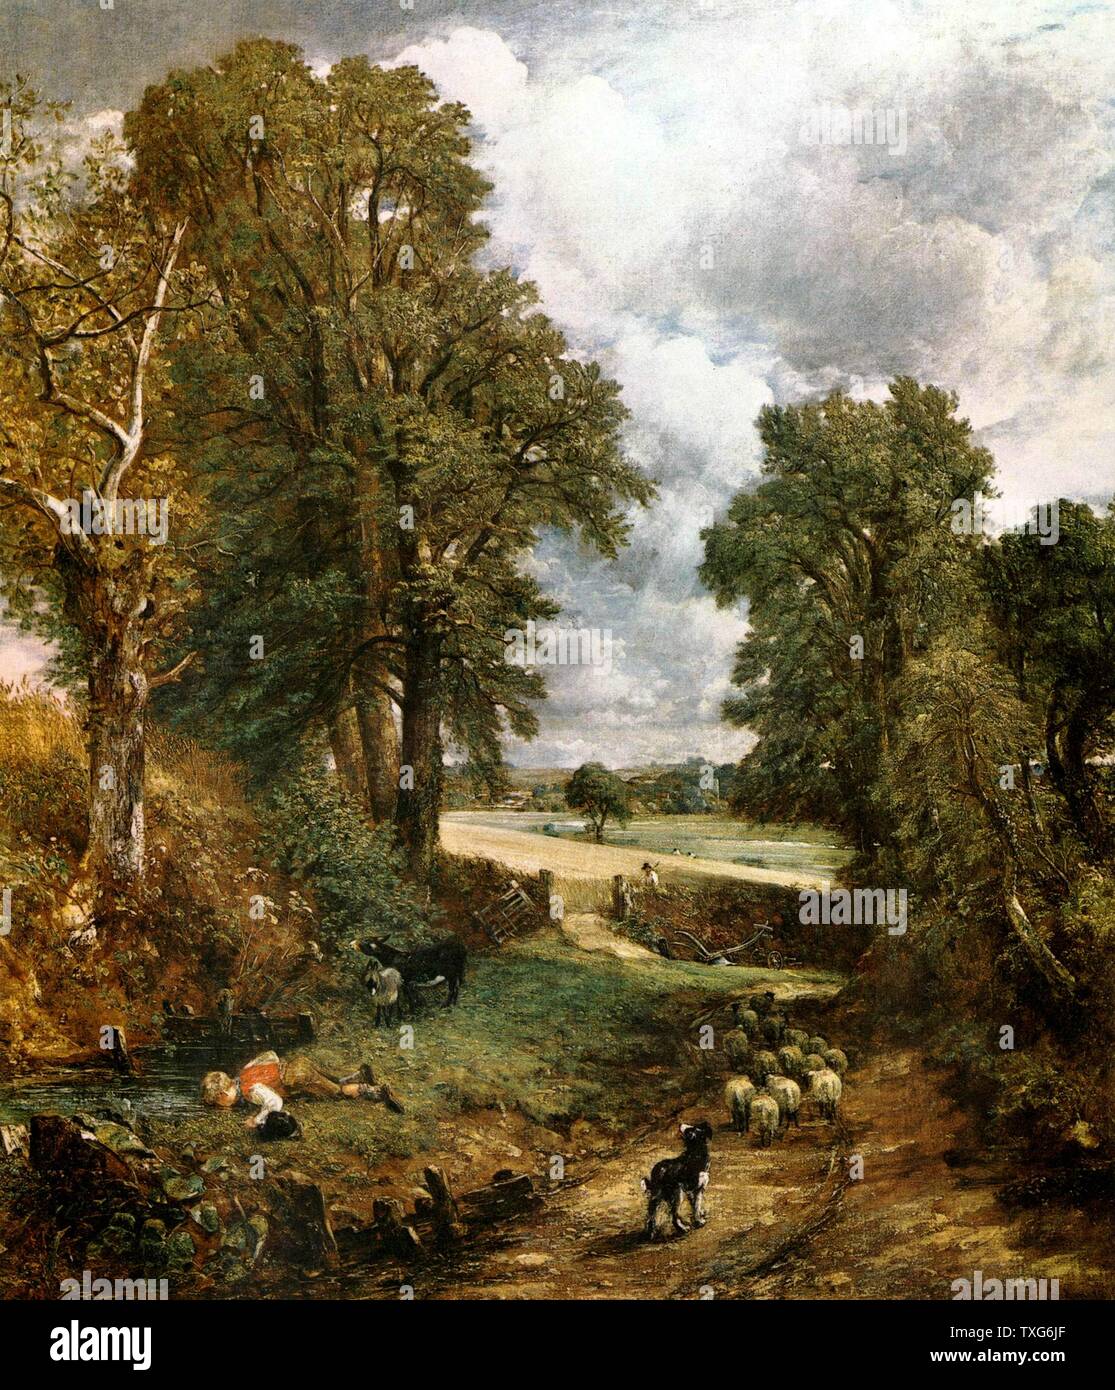 John Constable English school The cornifield 1826 Oil on canvas (143 x 122 cm) London, National Gallery Stock Photo